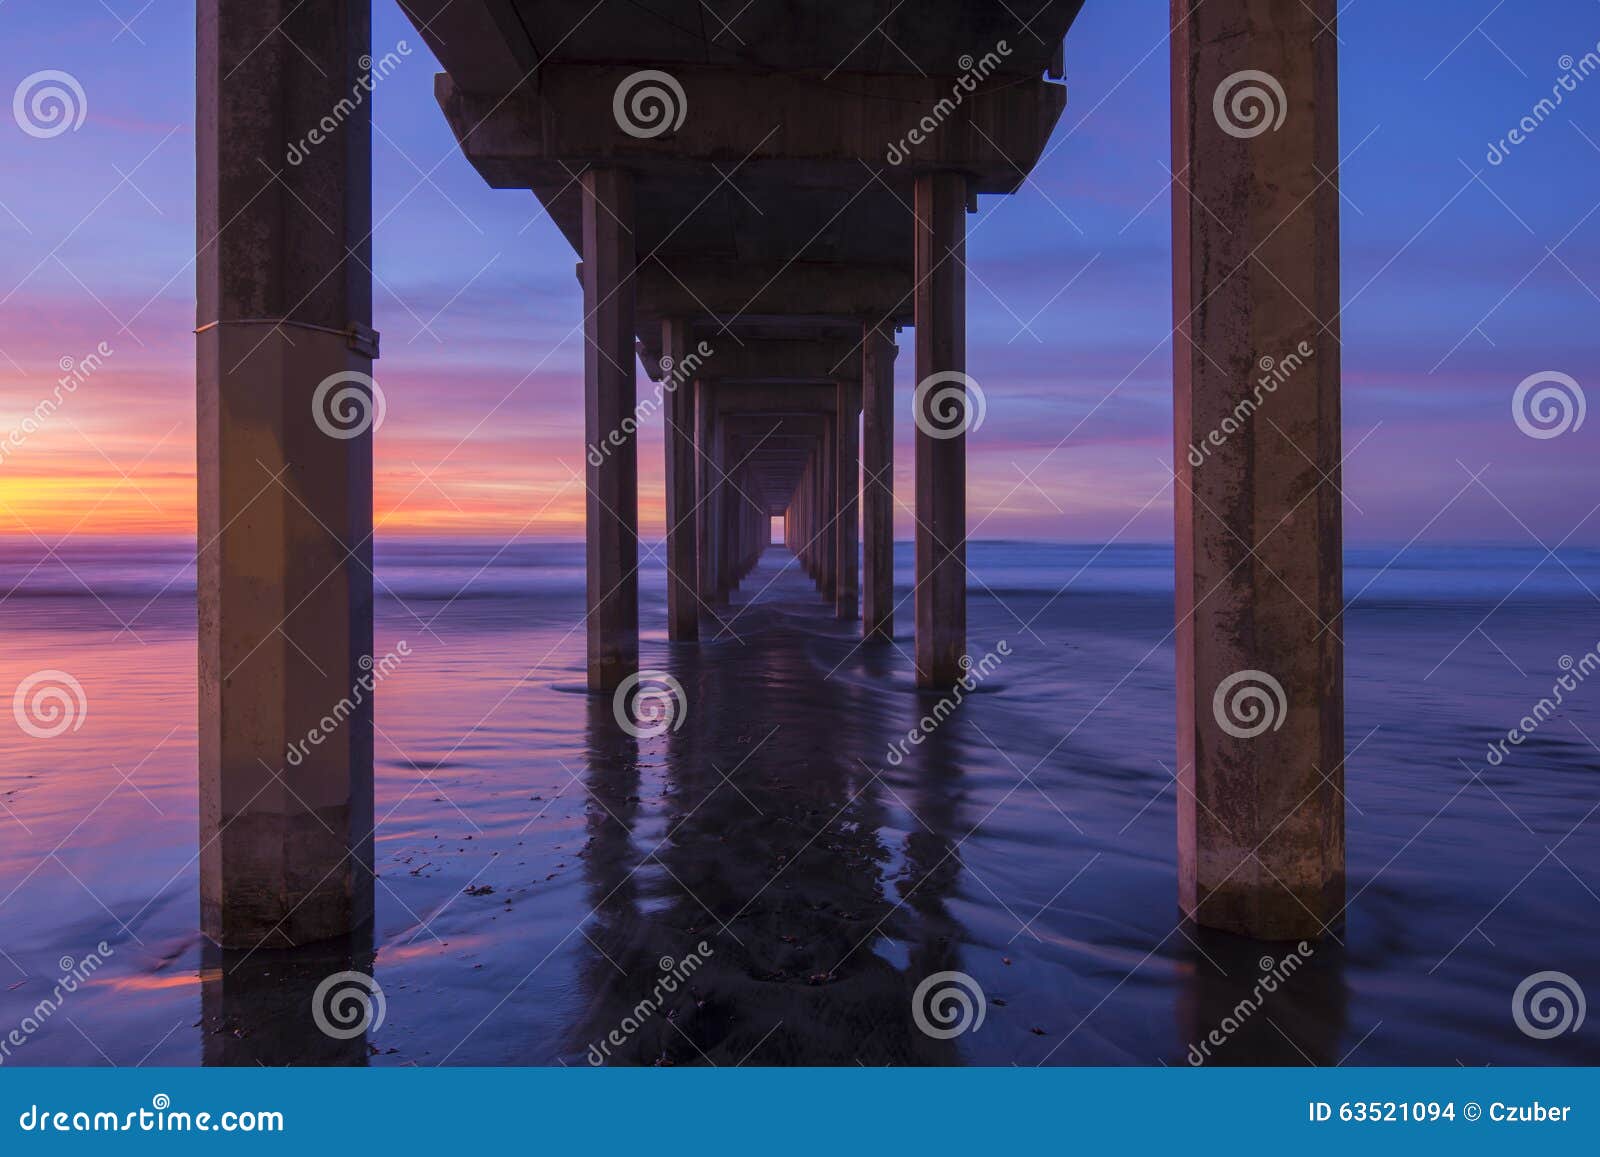 diminishing perspective under concrete pier